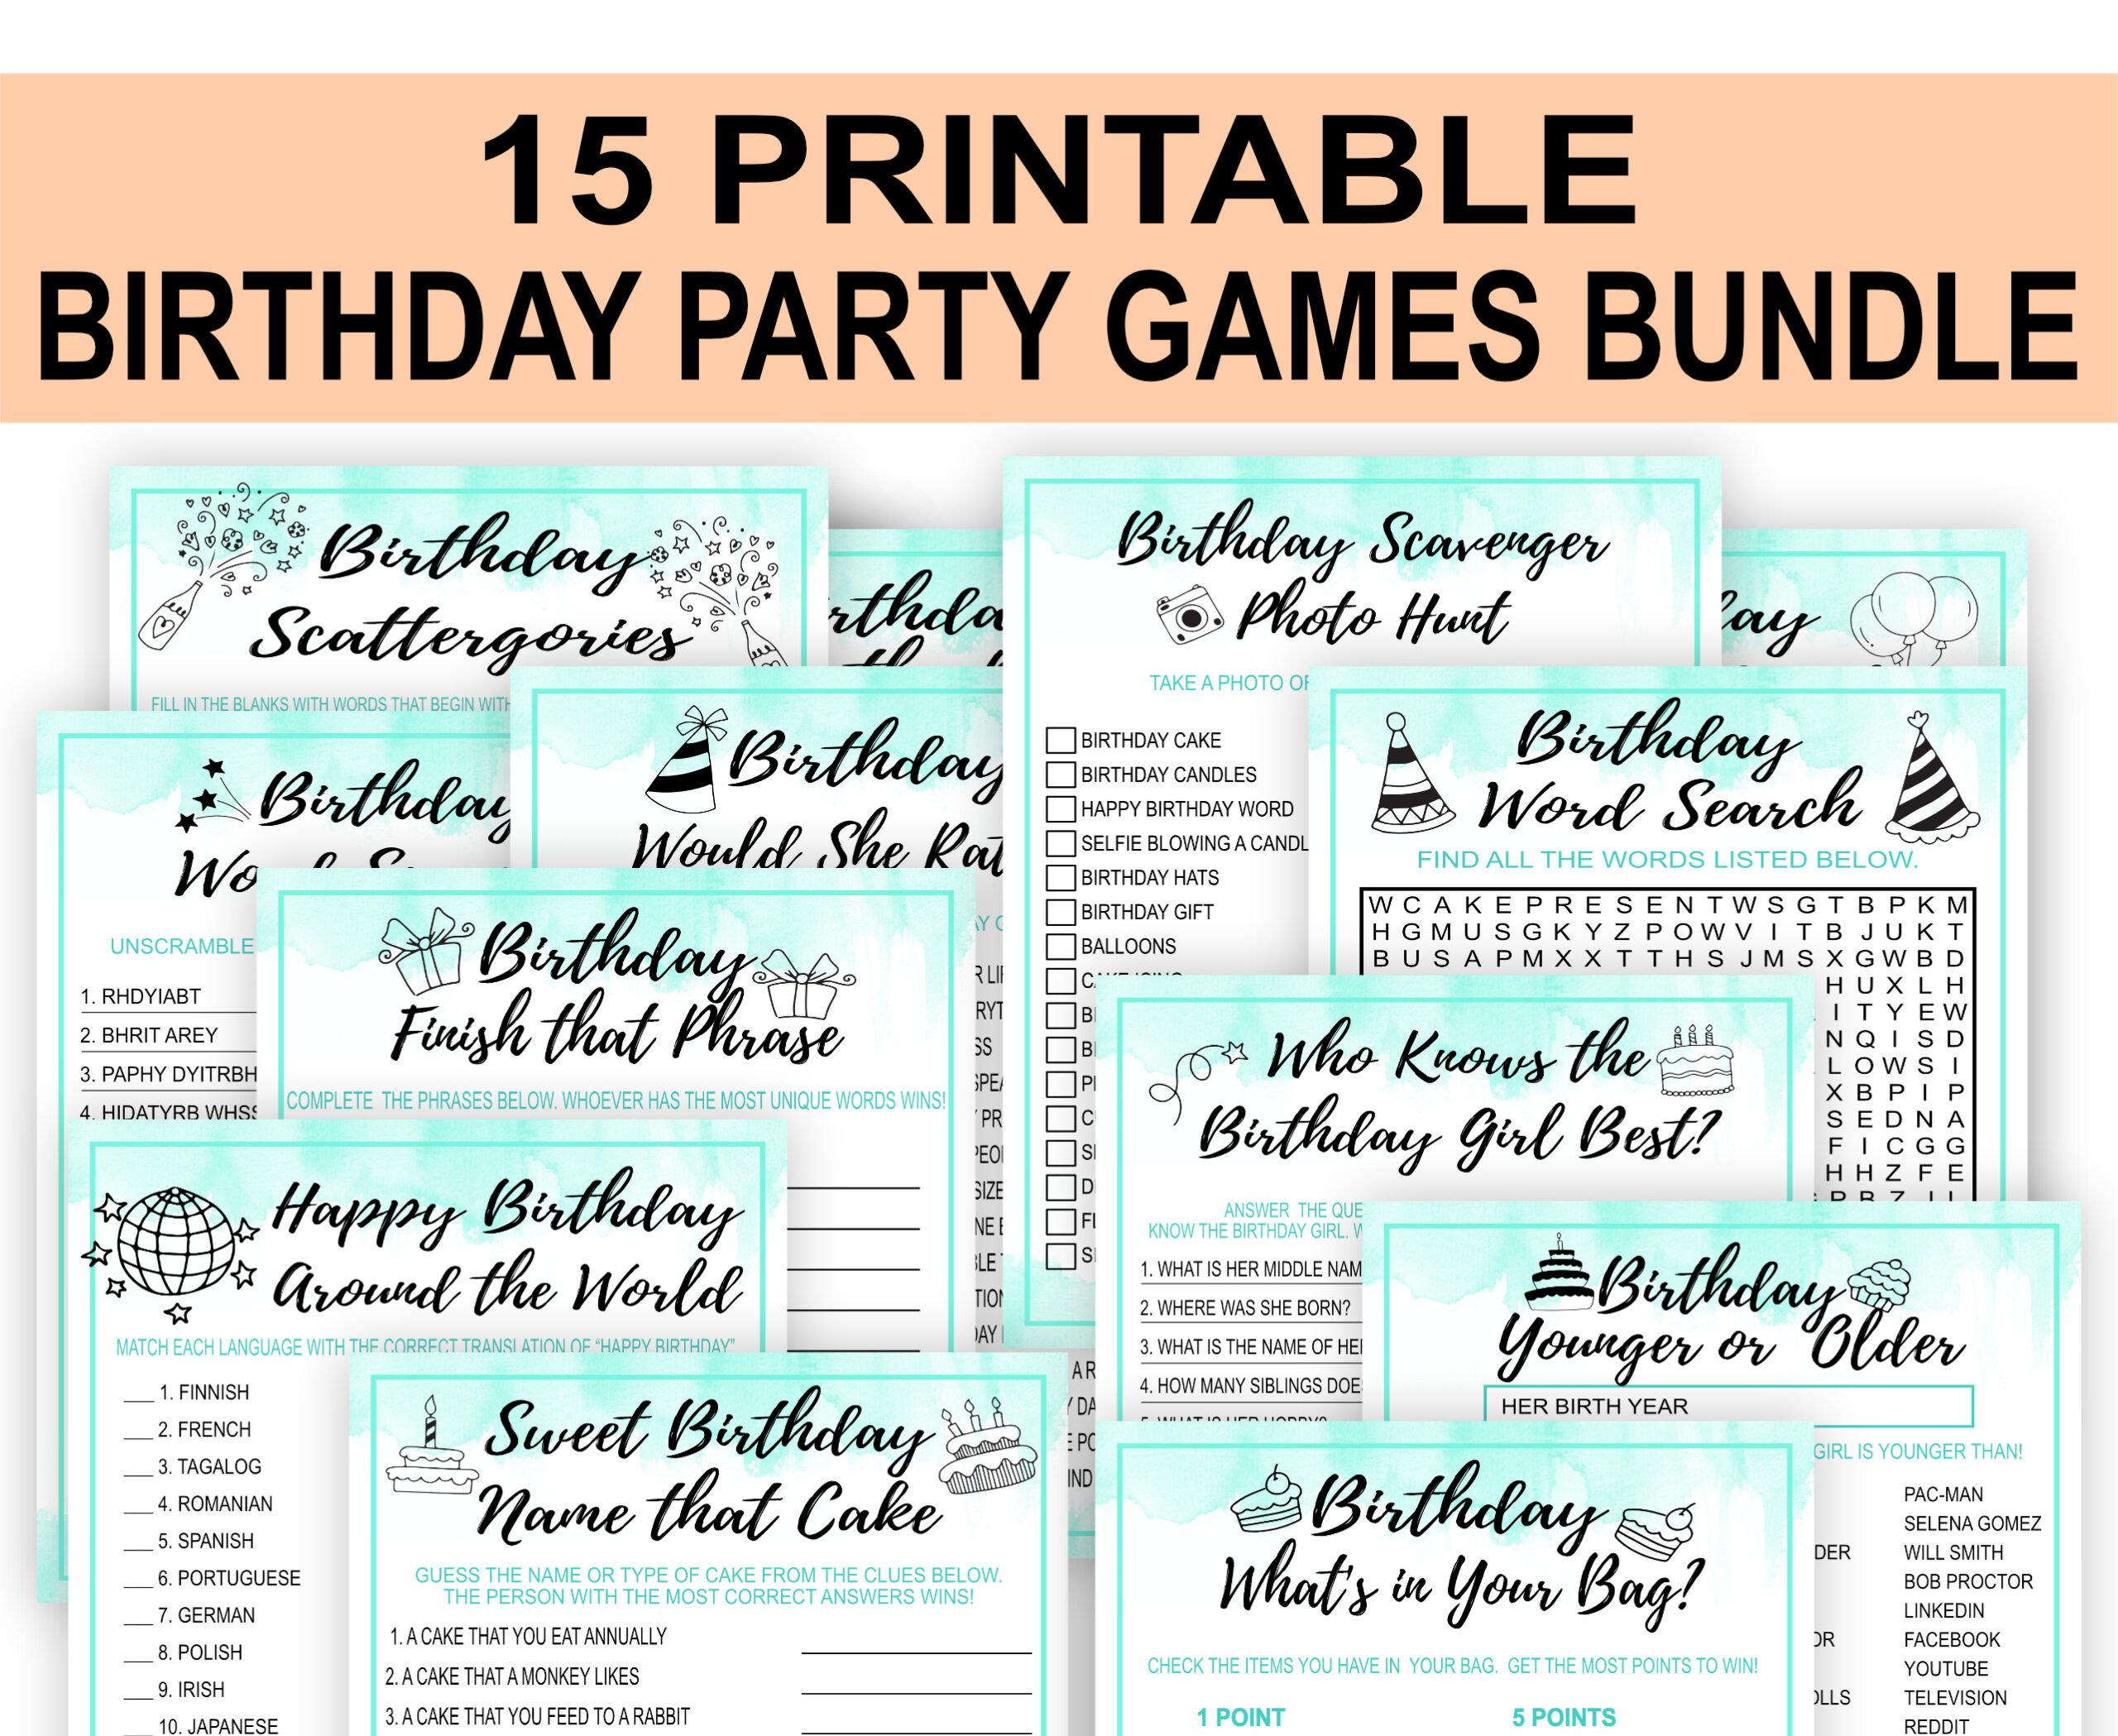 BIRTHDAY GAMES 15 PRINTABLE BIRTHDAY PARTY GAMES – MINT Adult Birthday